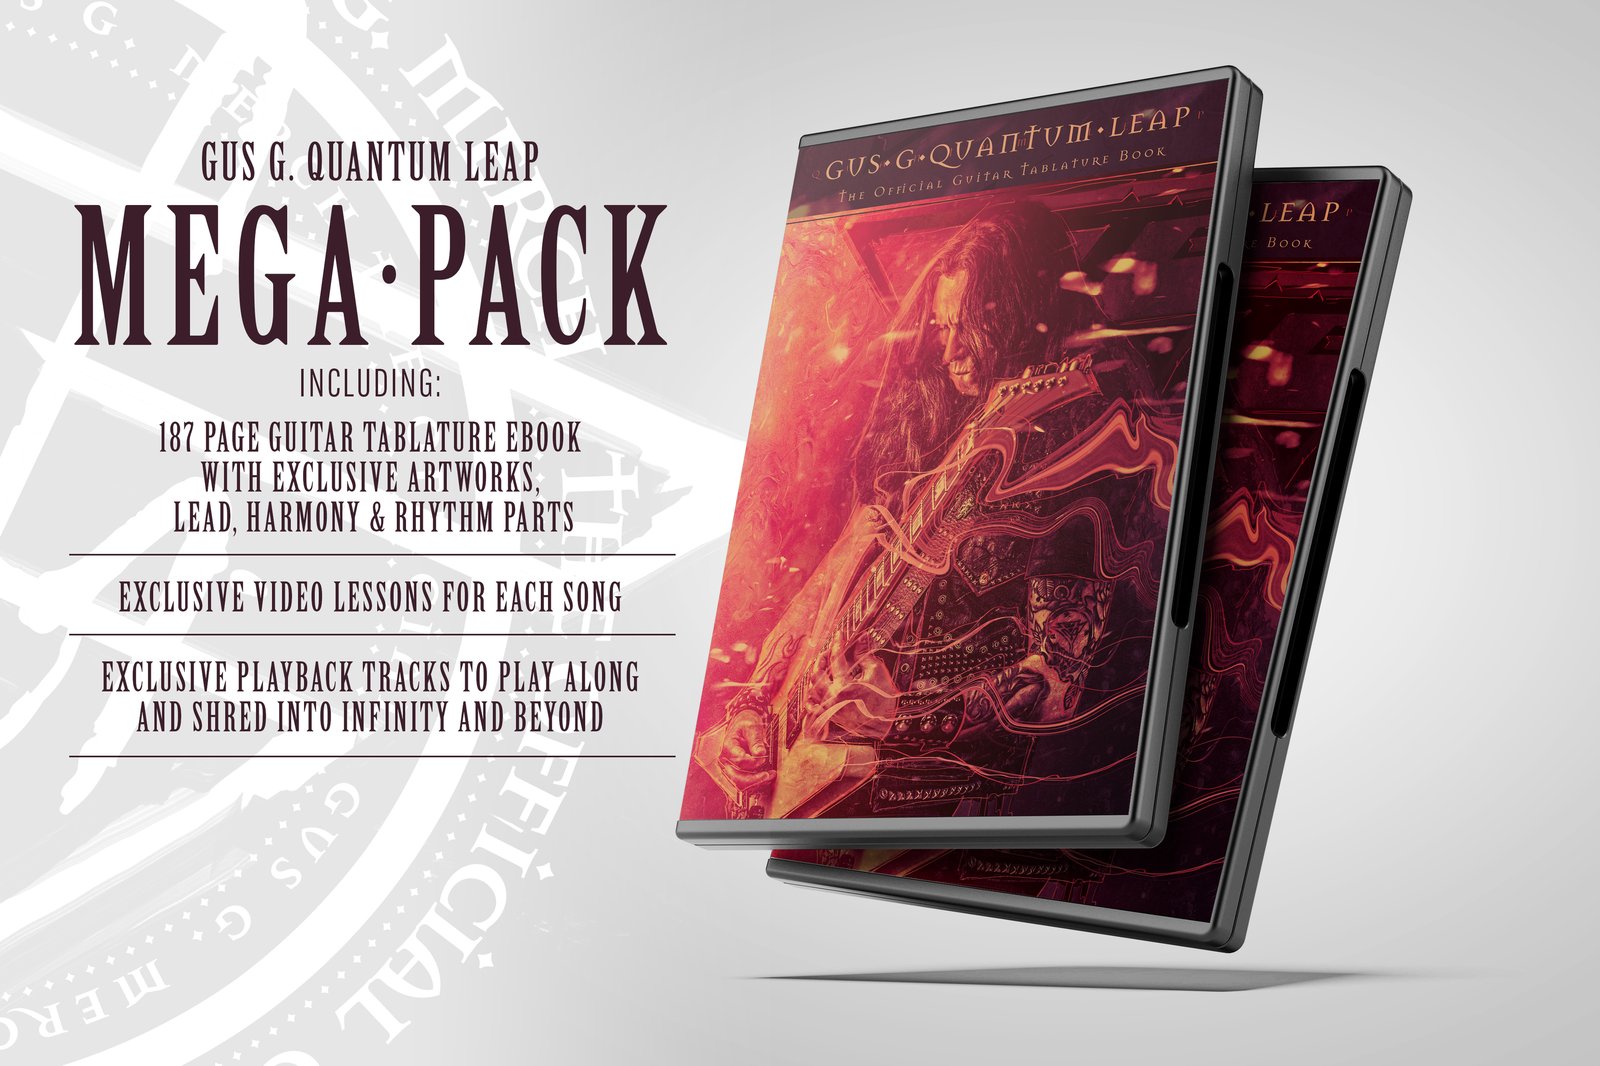 Gus G. - Quantum Leap / The Complete Tablature Book (Mega Pack!) | Gus G